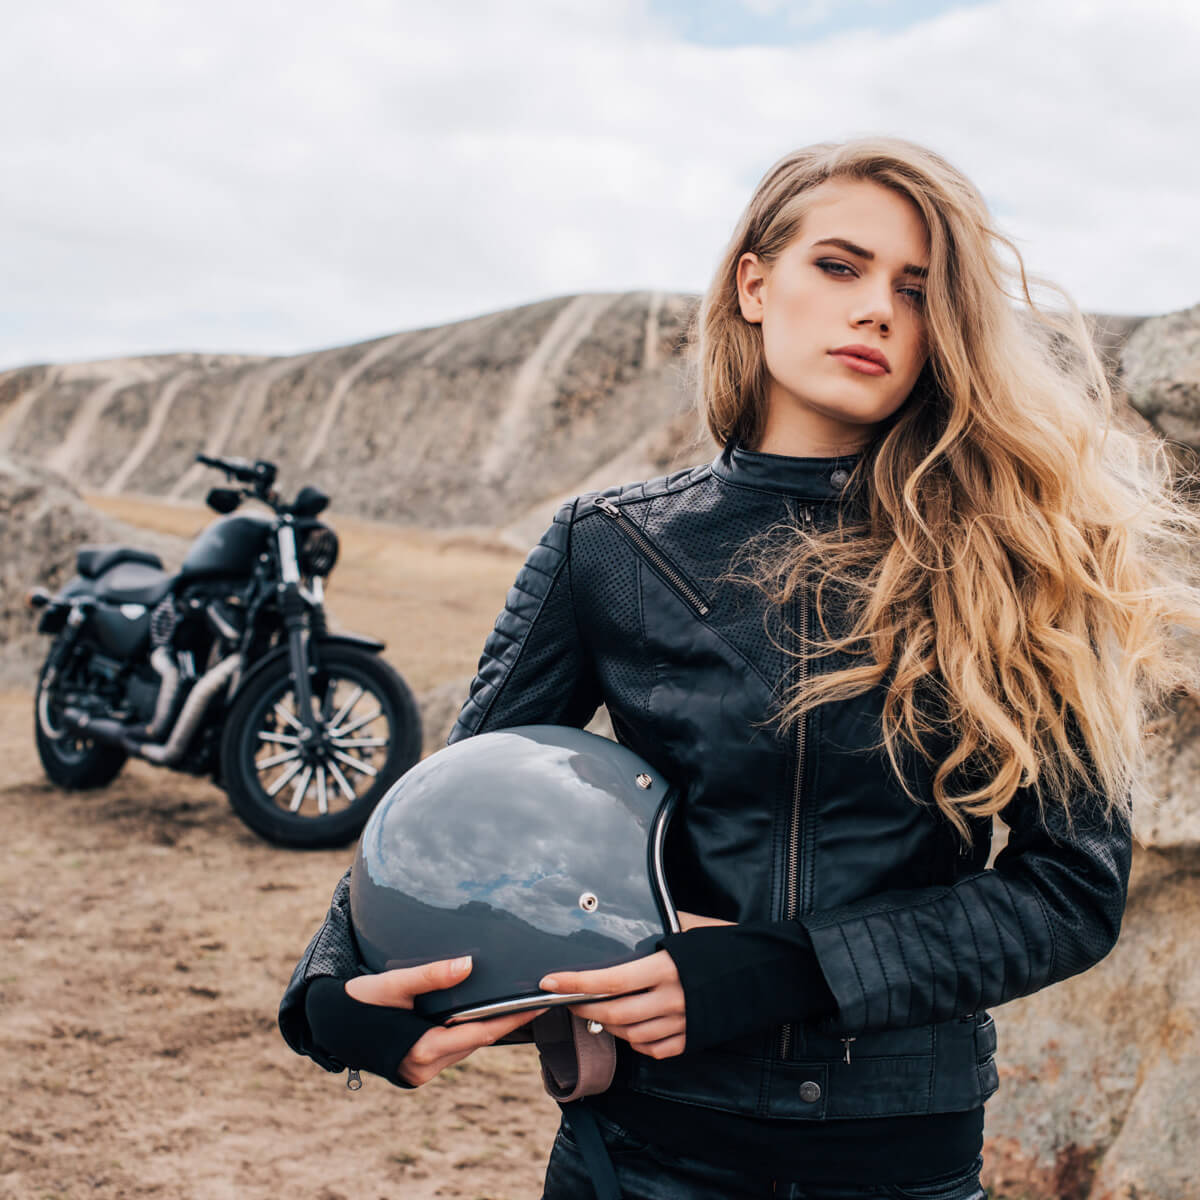 Black Arrow Moto | Wild & Free Perforated Leather Jacket - Rust - Women's Leather Jackets - Peak Moto